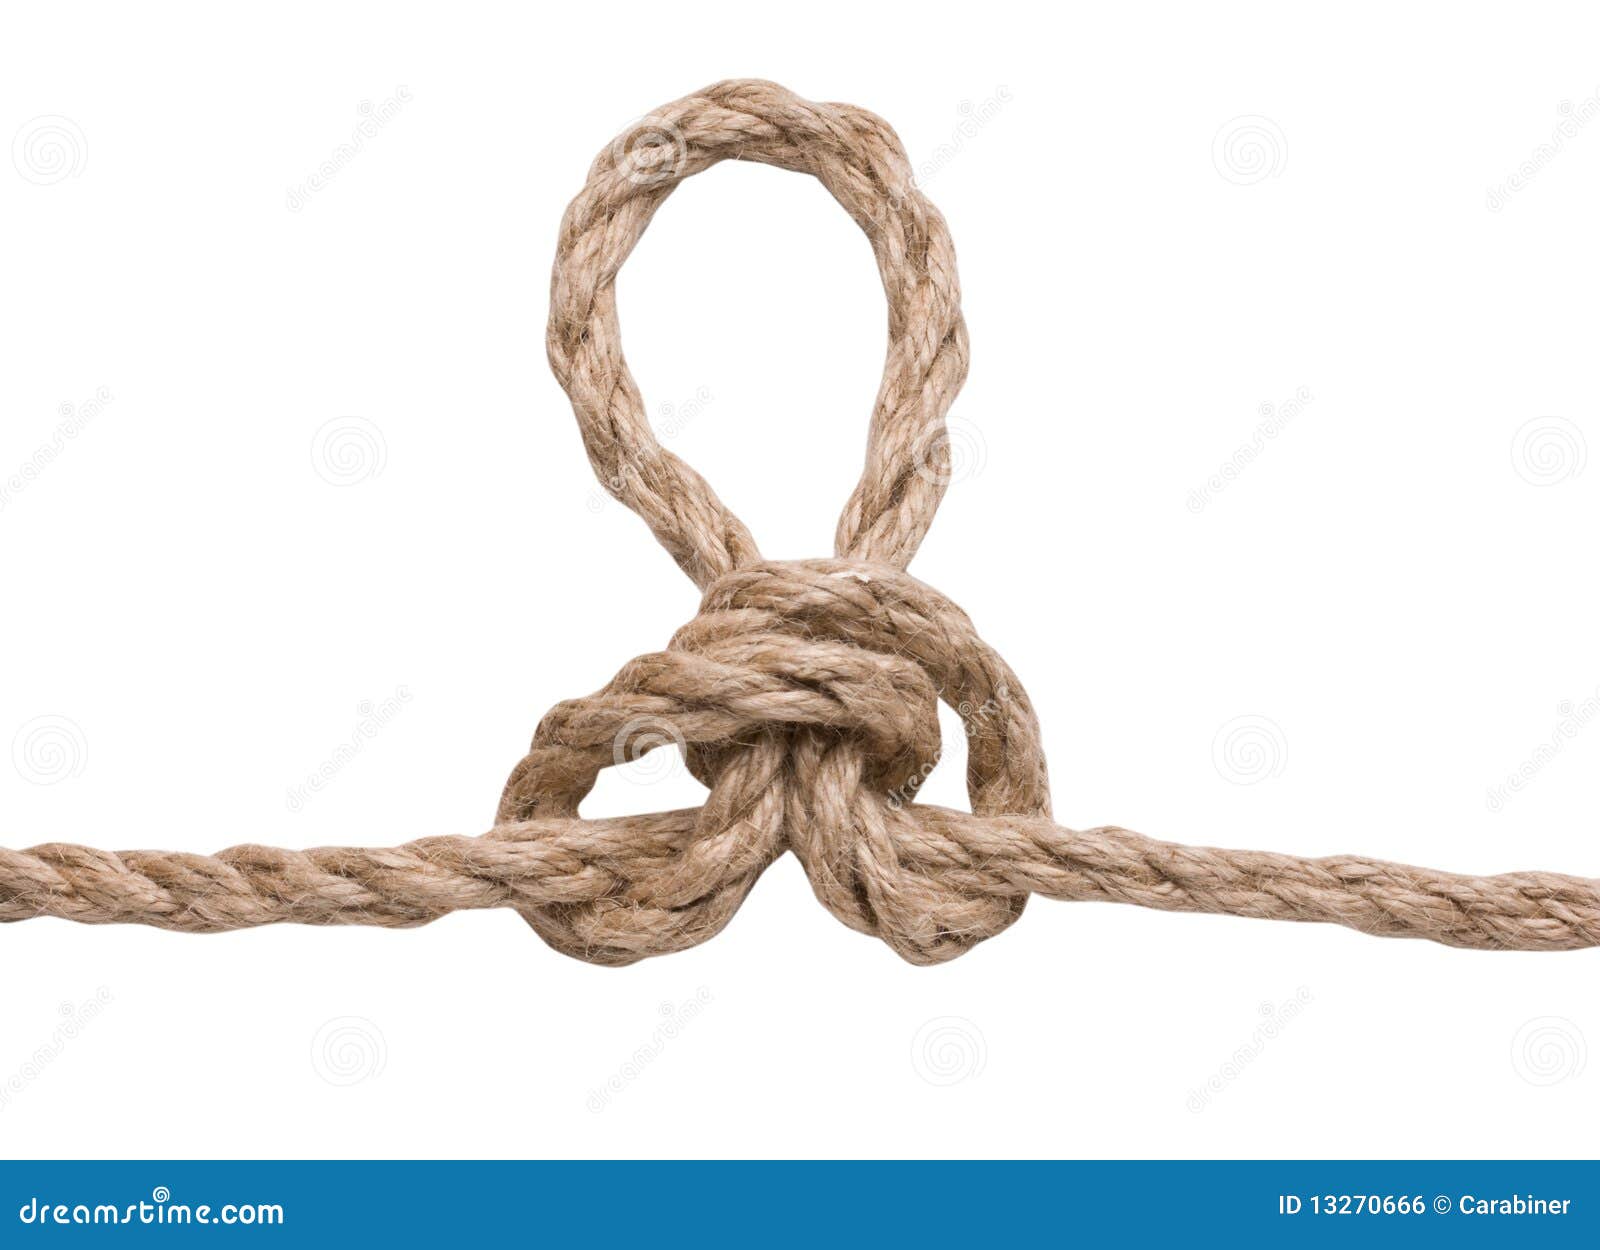 marines knot